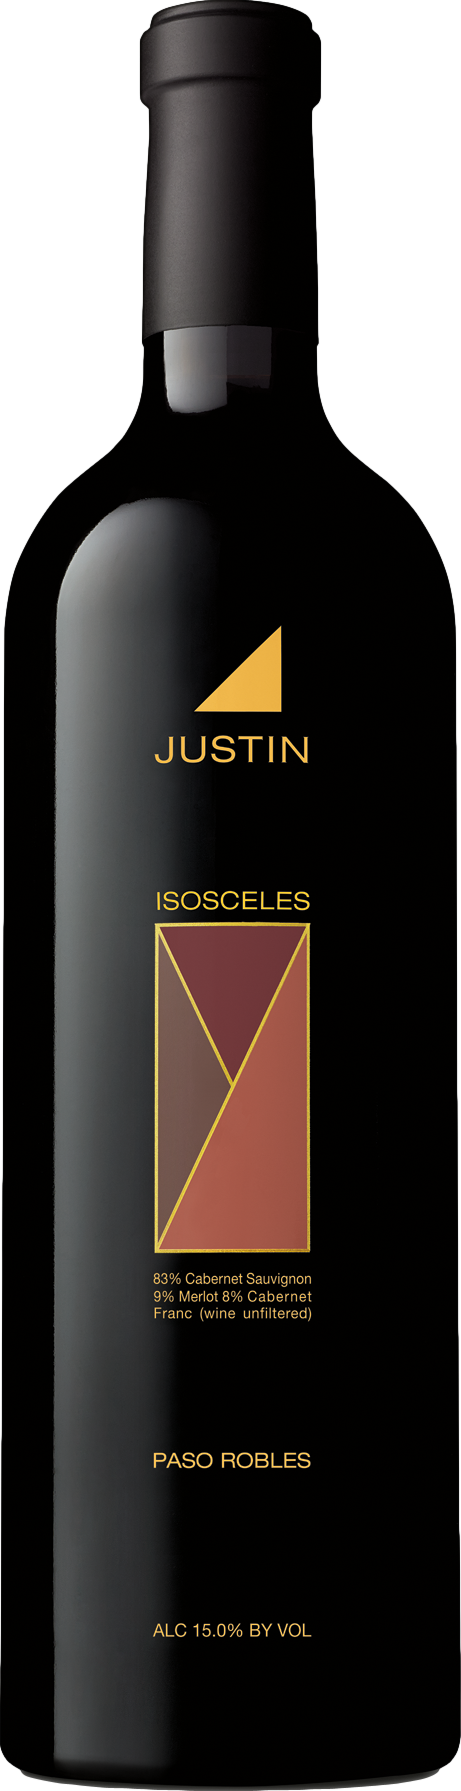 Justin Isosceles 2018 Červené 15.0% 0.75 l